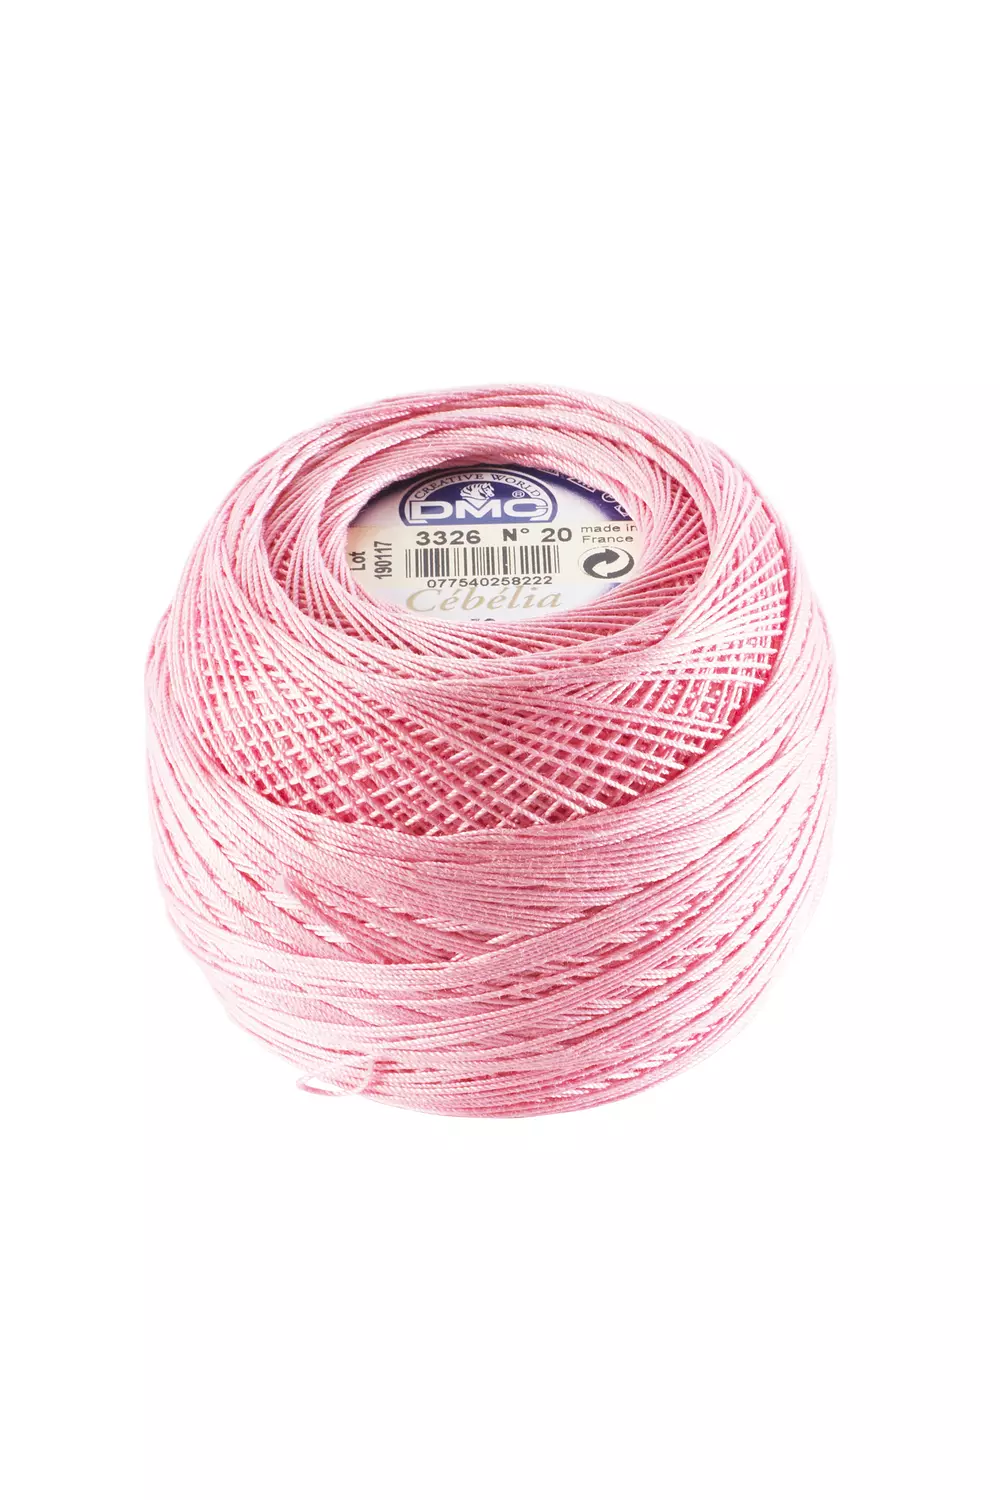 !Cebelia Crochet Thread Size 10 - Light Beige (Color #3033) - FULL BAG SALE  (10 Skeins)